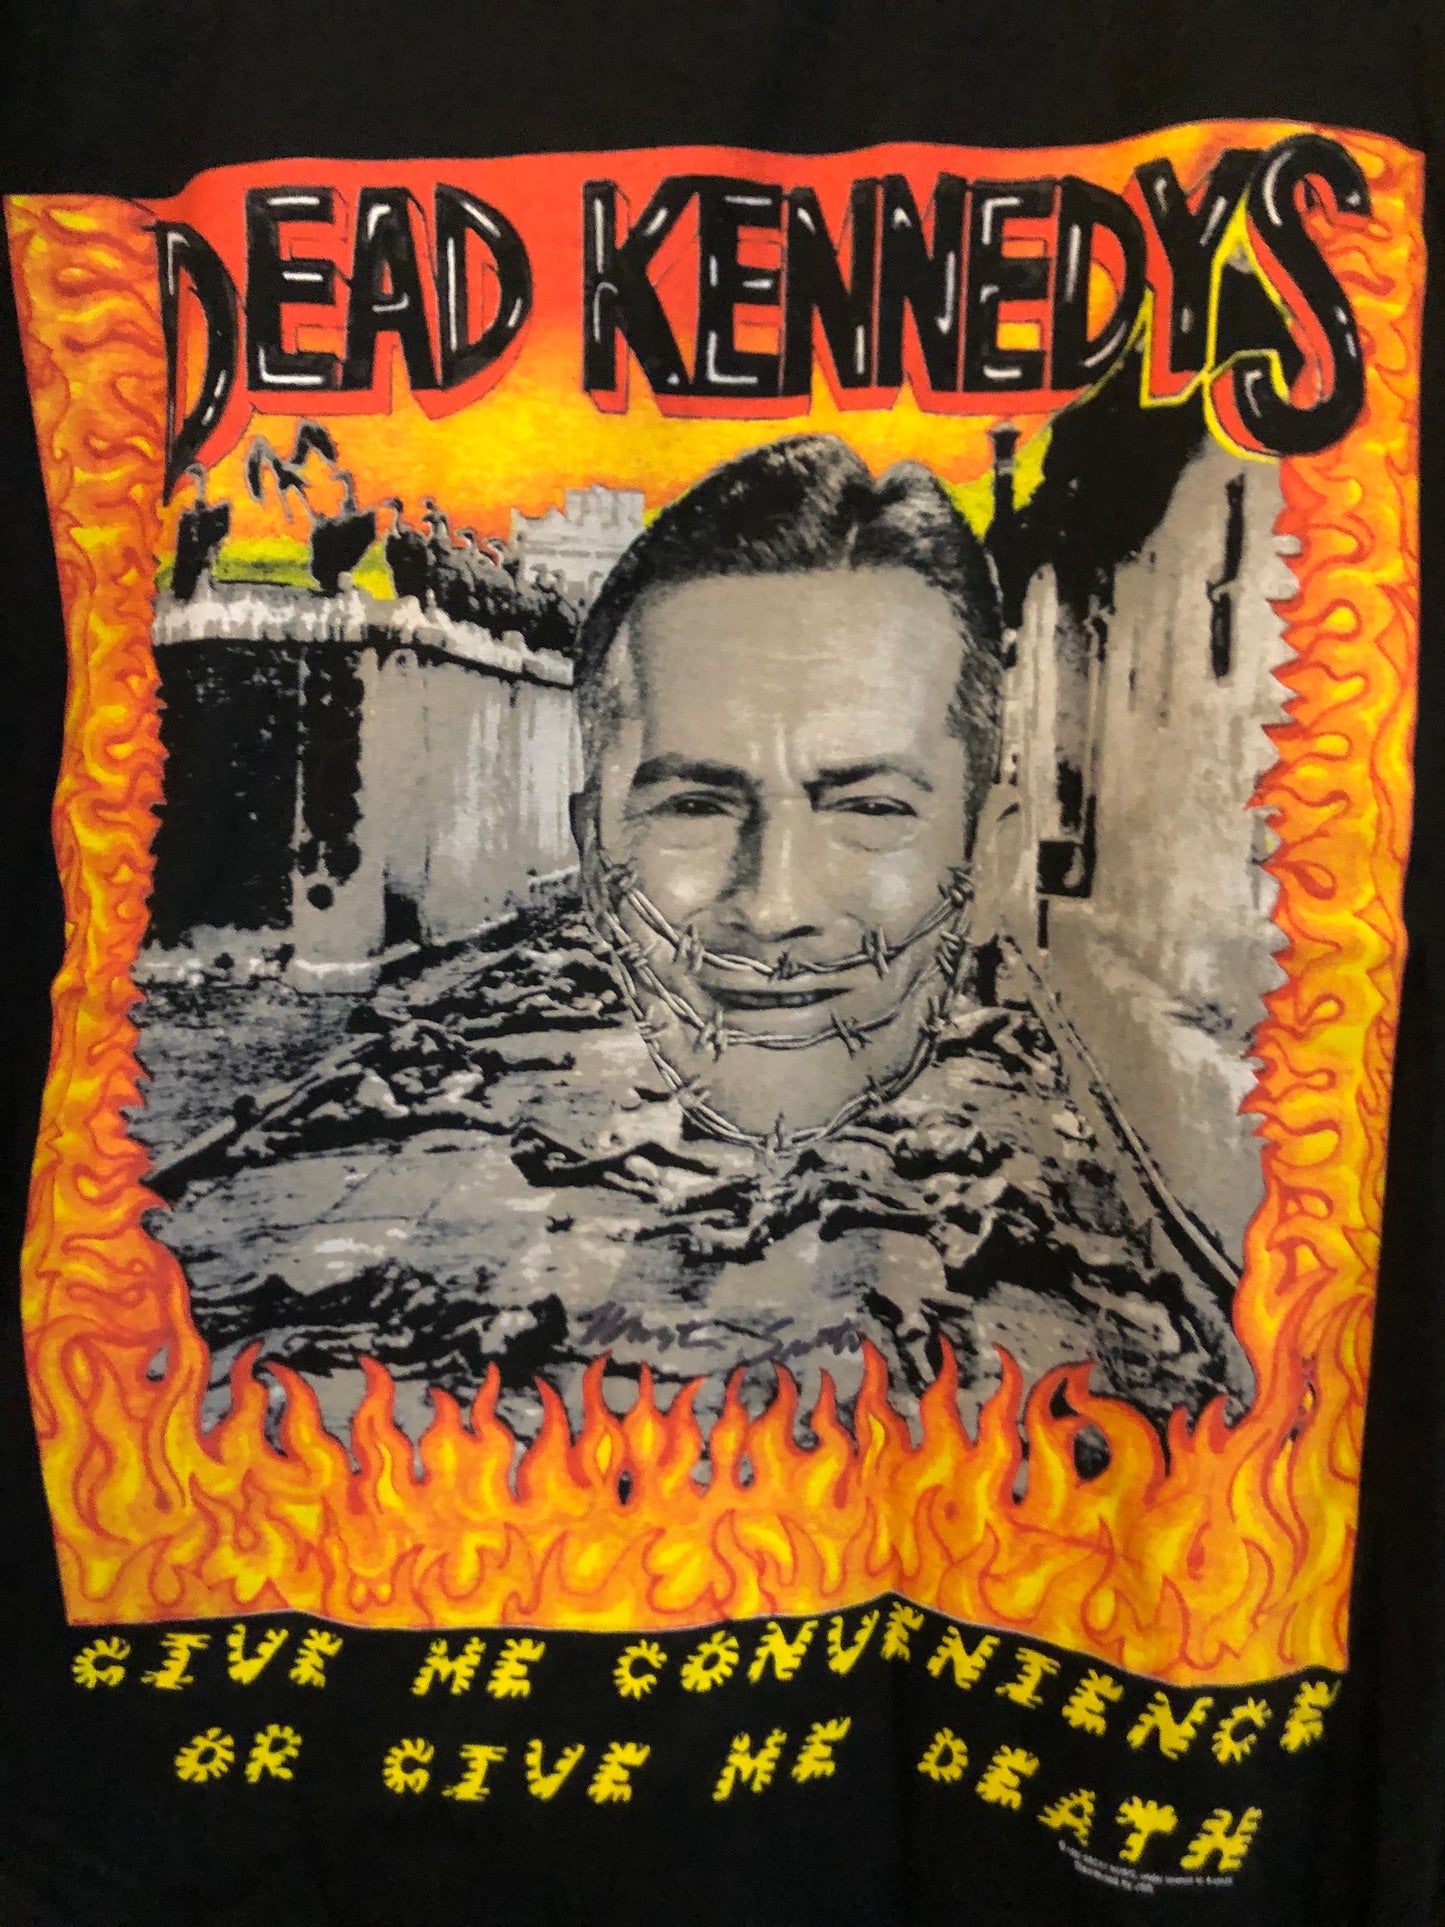 "Dead Kennedys Give Me Convenience" Vintage T-Shirt (1997)